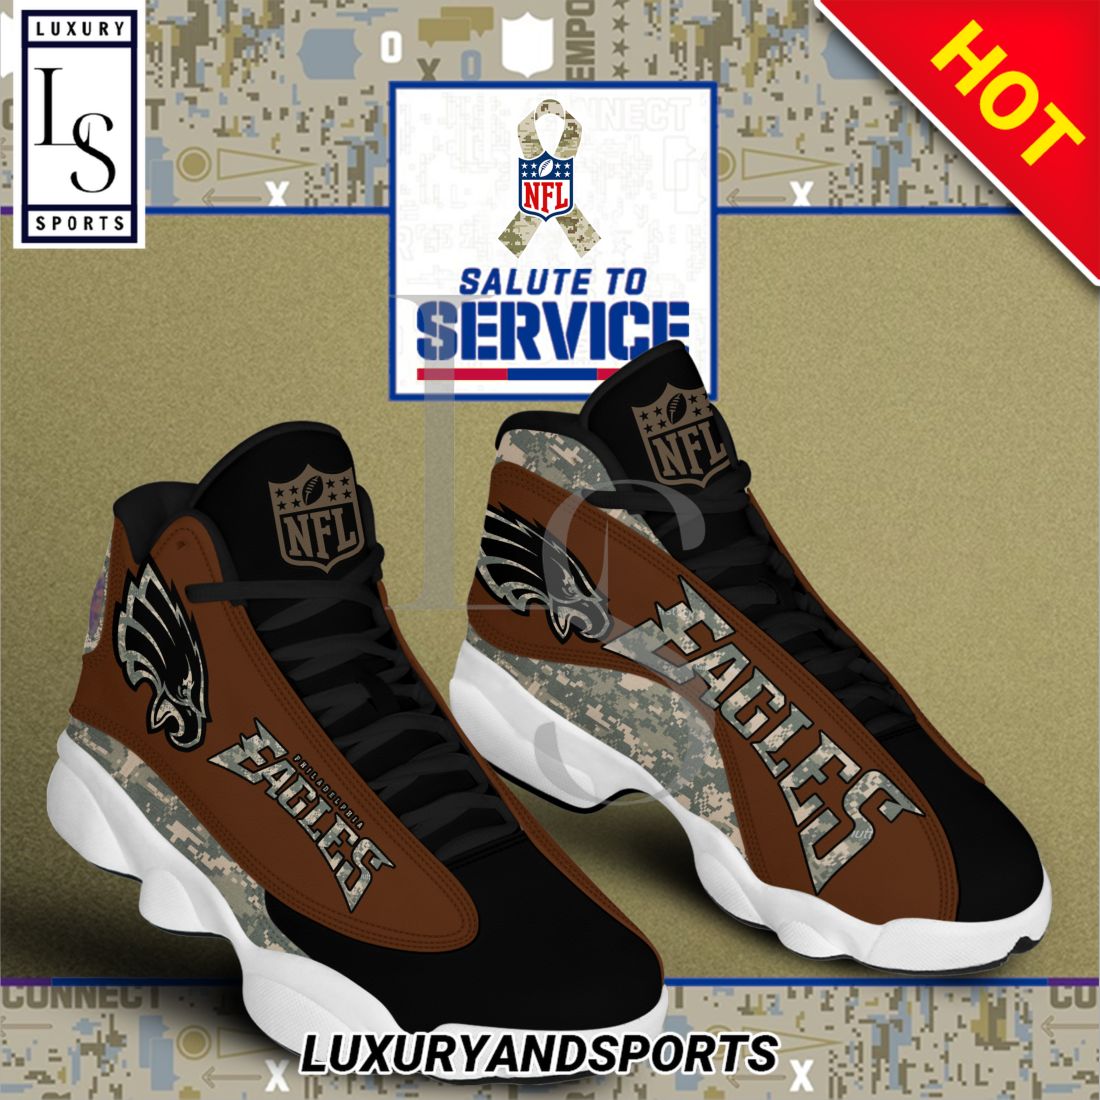 NFL Philadelphia Eagles NFL Salute To Service Air Jordan Sneaker